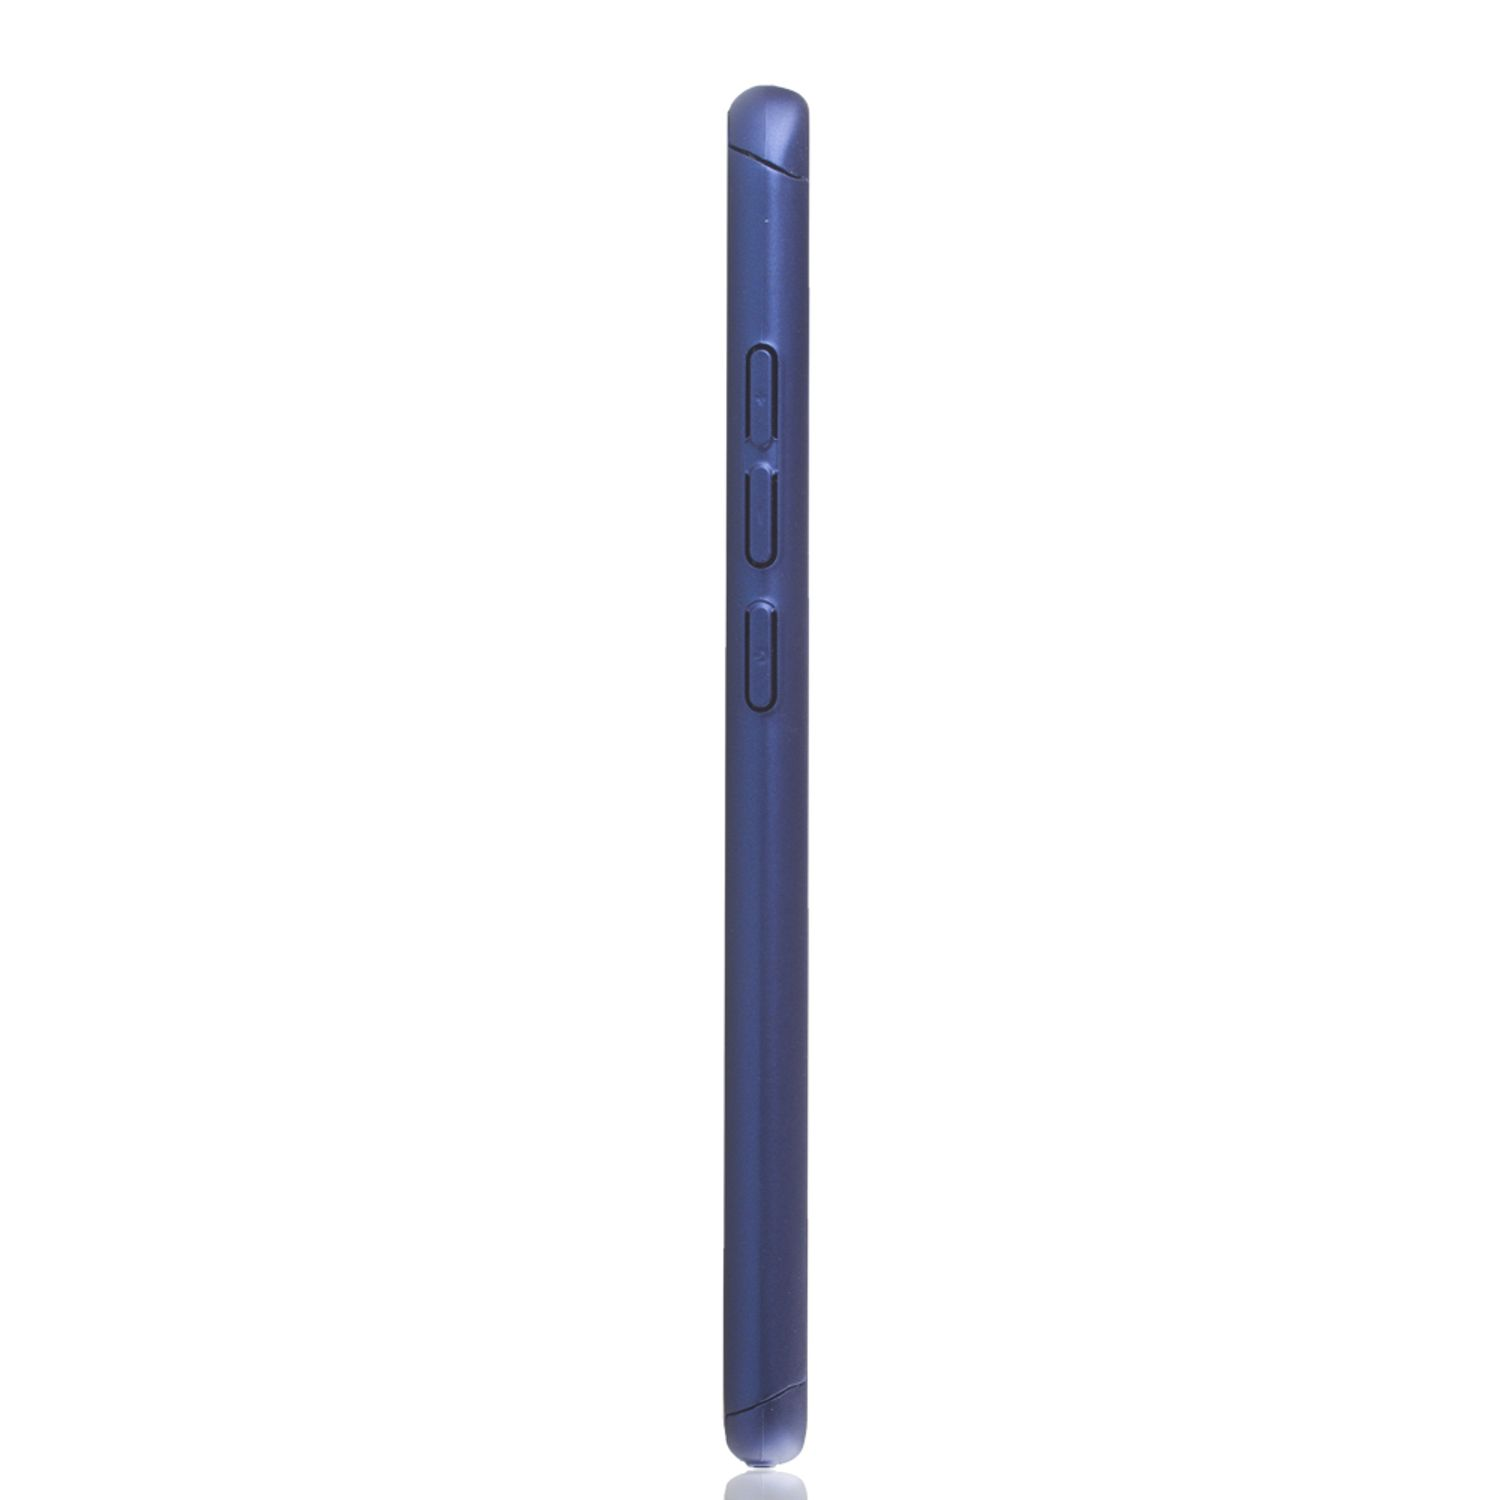 Blau Mi 8, Full Schutzhülle, KÖNIG DESIGN Cover, Xiaomi,